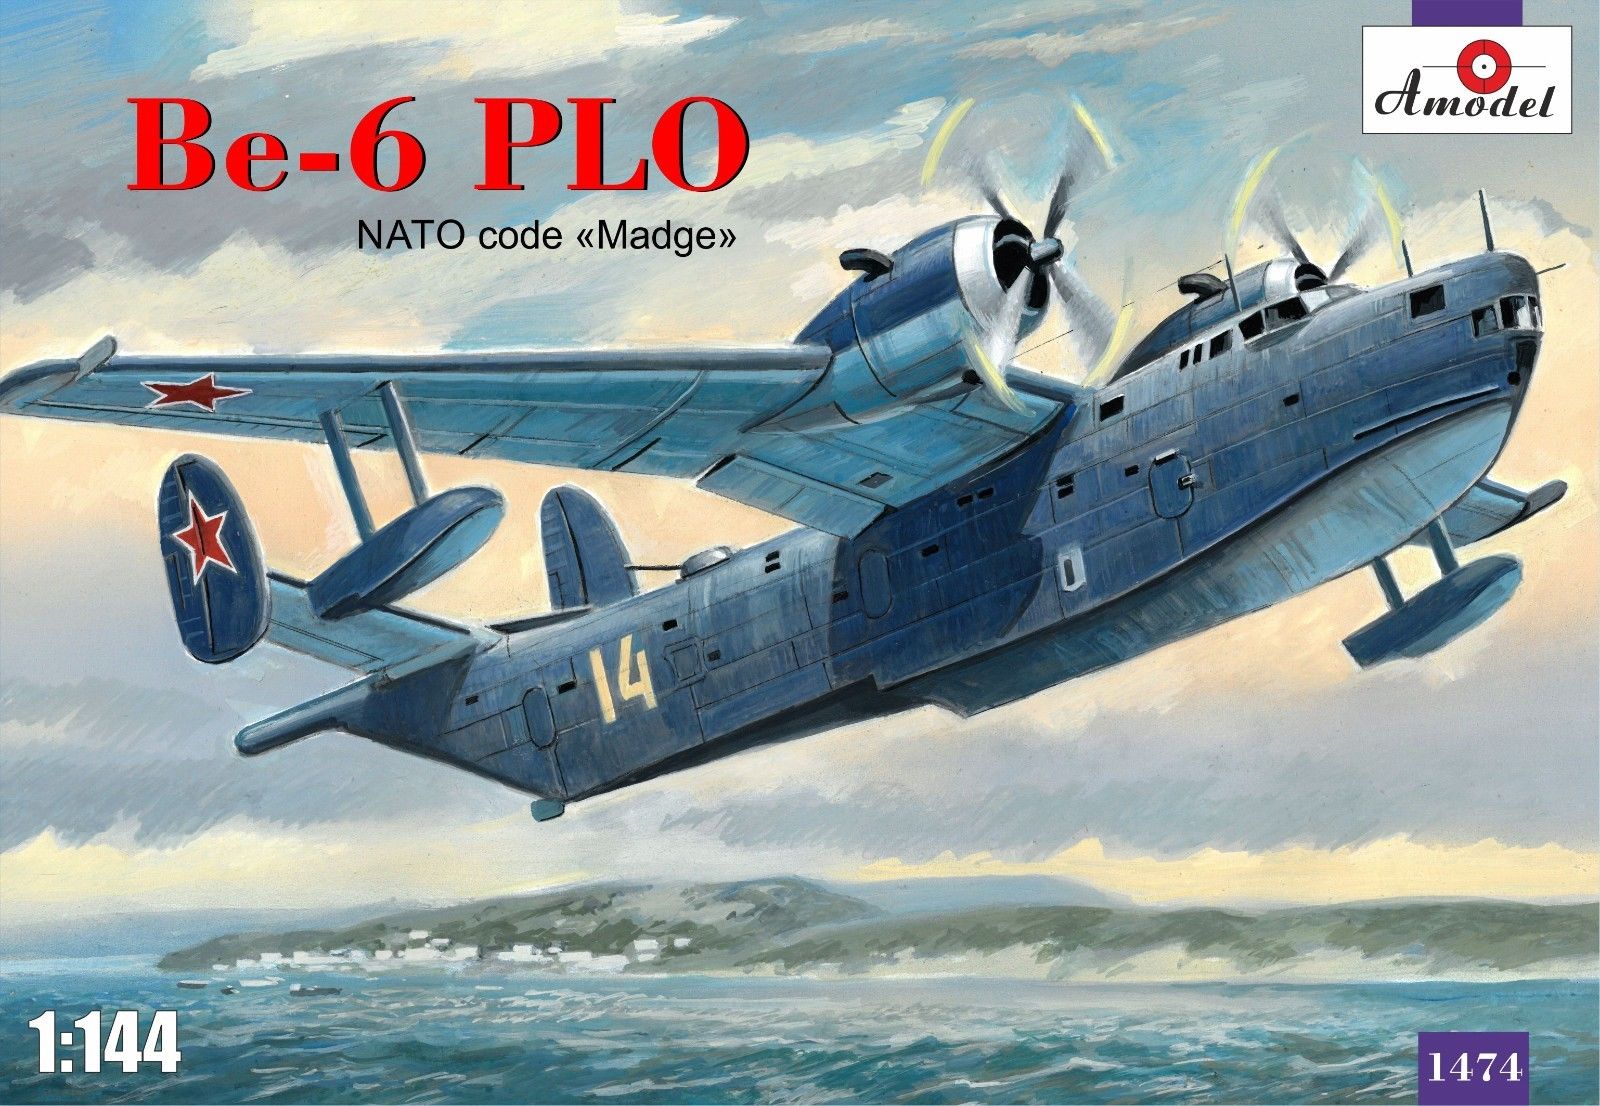 Be-6 PLO NATO code 